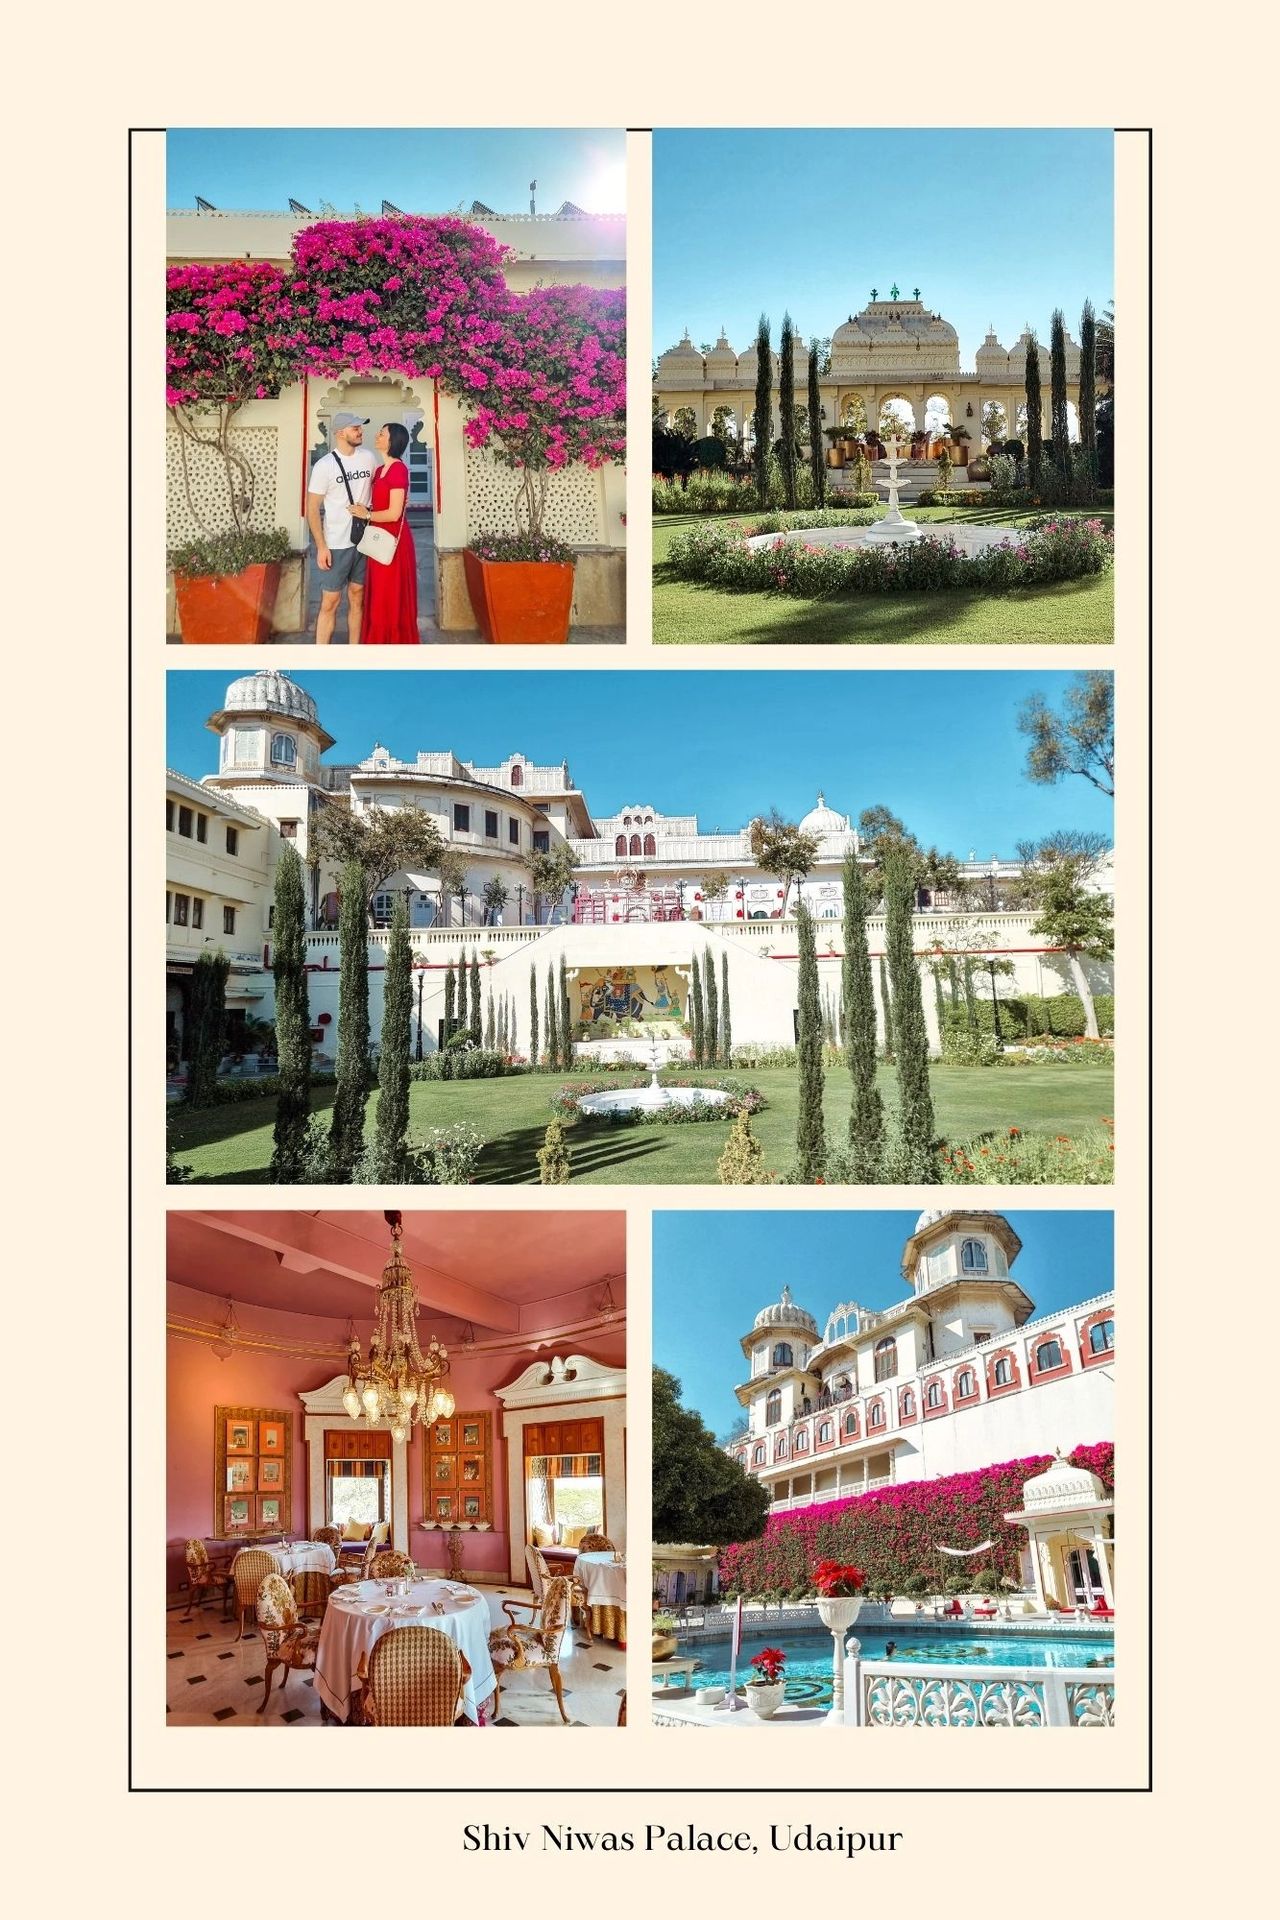 Shiv Niwas Palace, Udaipur, India